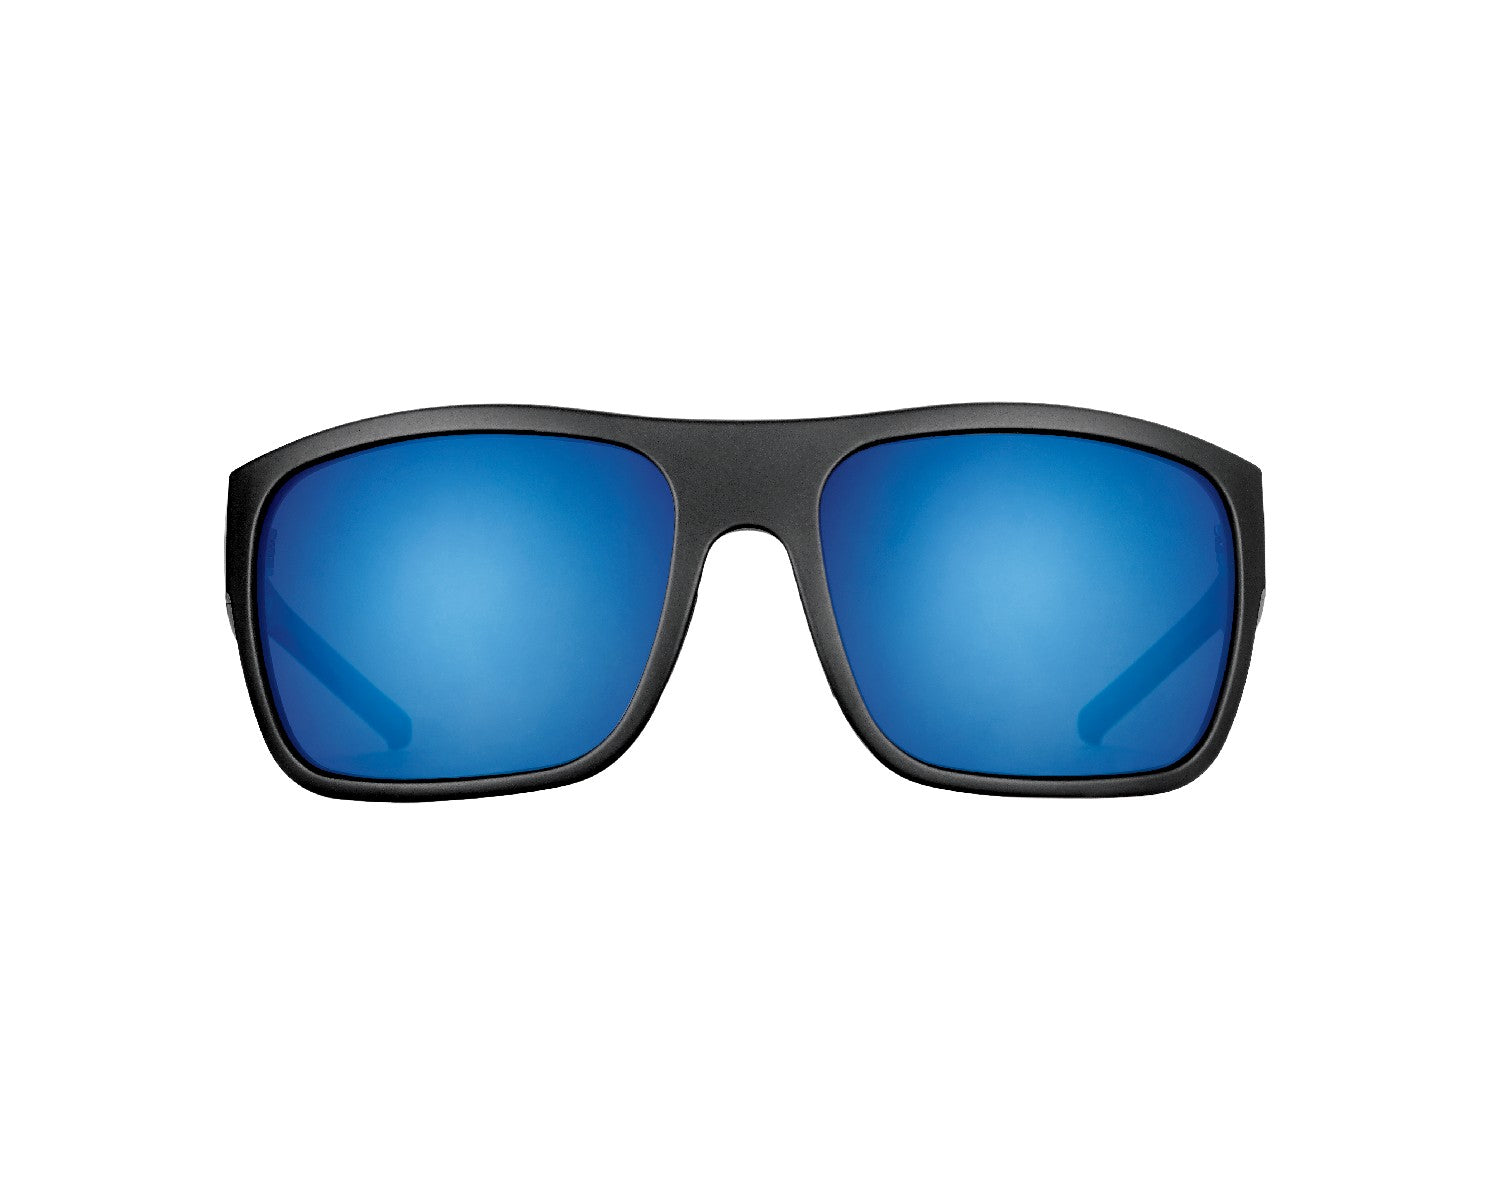 Polarized Sunglasses for Men and Women - Blue Otter Nigeria